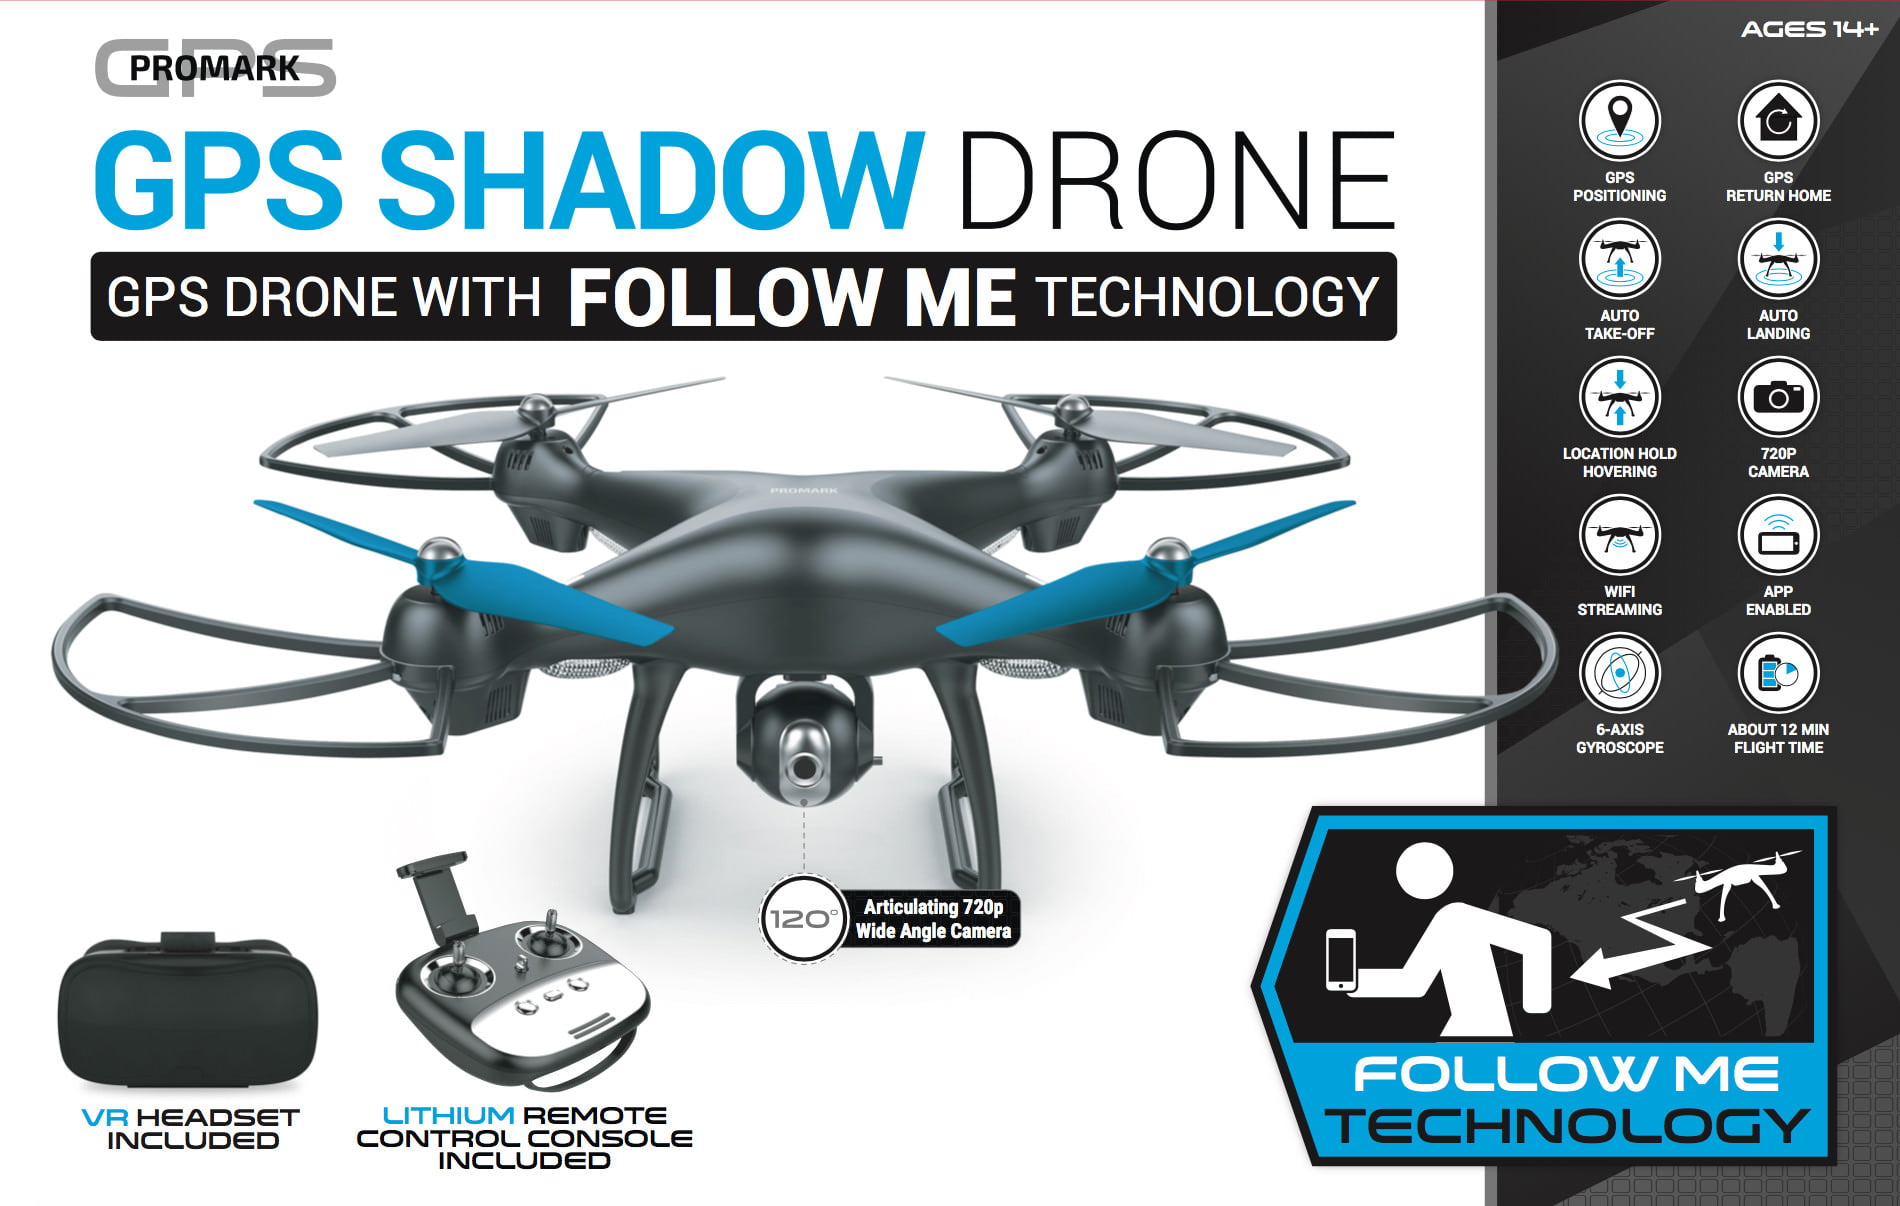 gps shadow drone